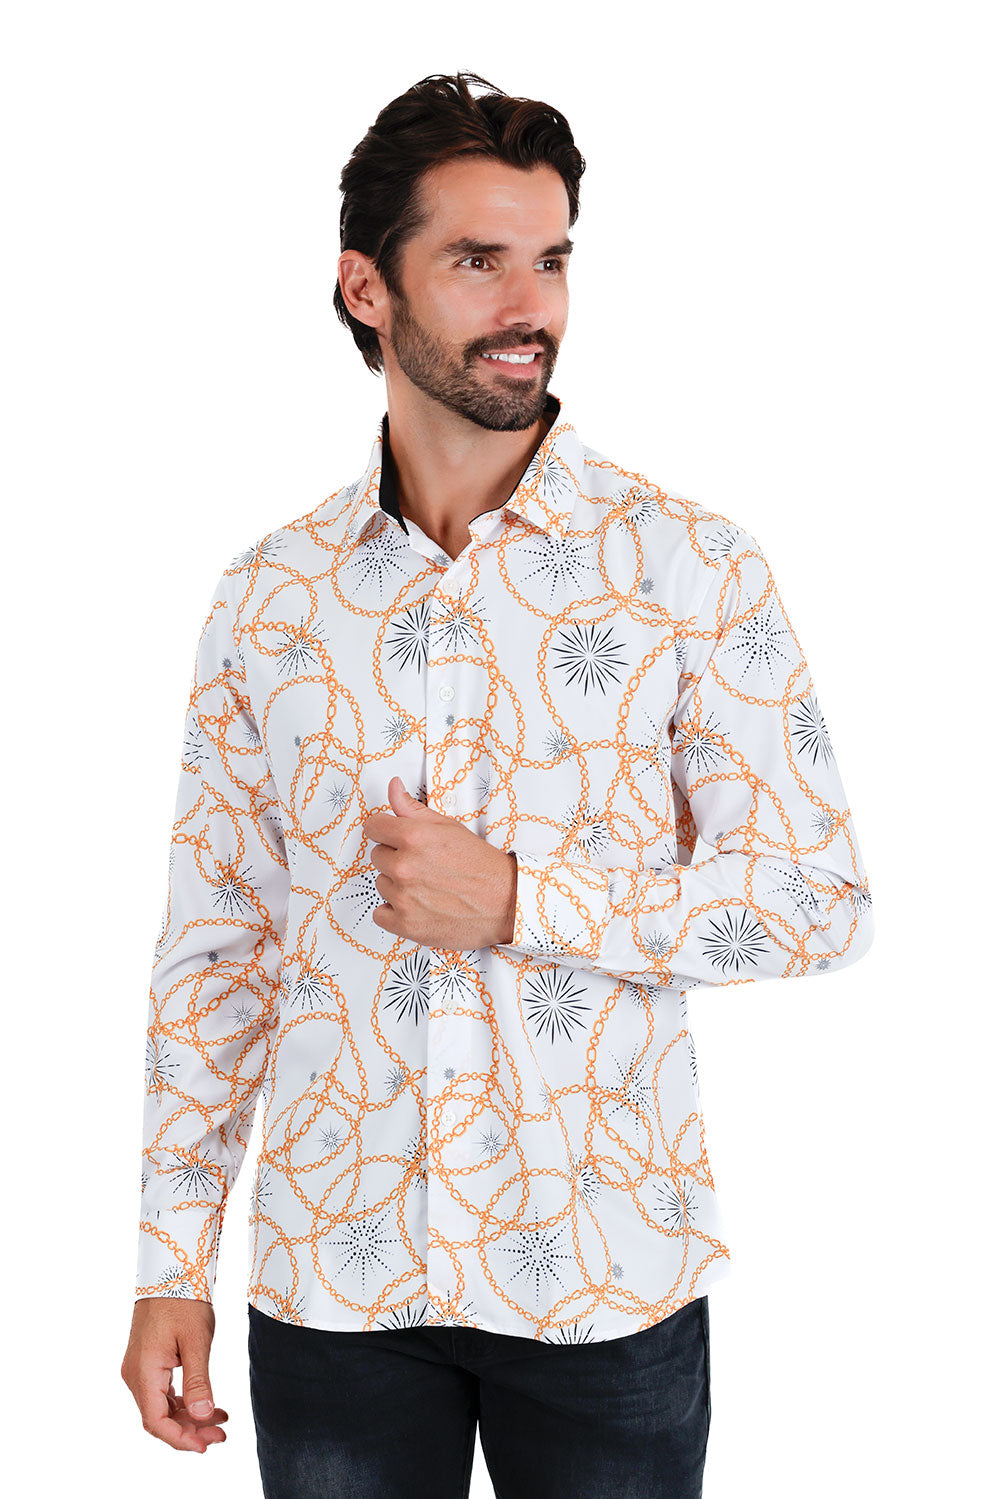 Vassari Men's Geometric Printed Long Sleeve Shirts 3VS14 White